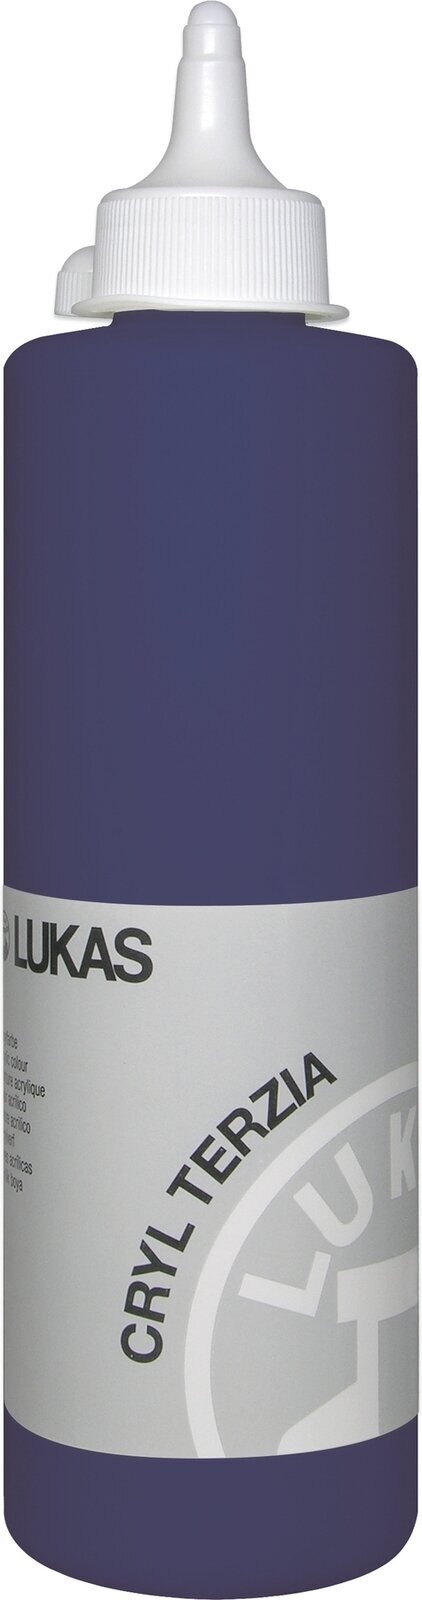 Акрилна боя Lukas Cryl Terzia Acrylic Paint Plastic Bottle АКРИЛНА боя Prussian Blue 500 ml 1 бр